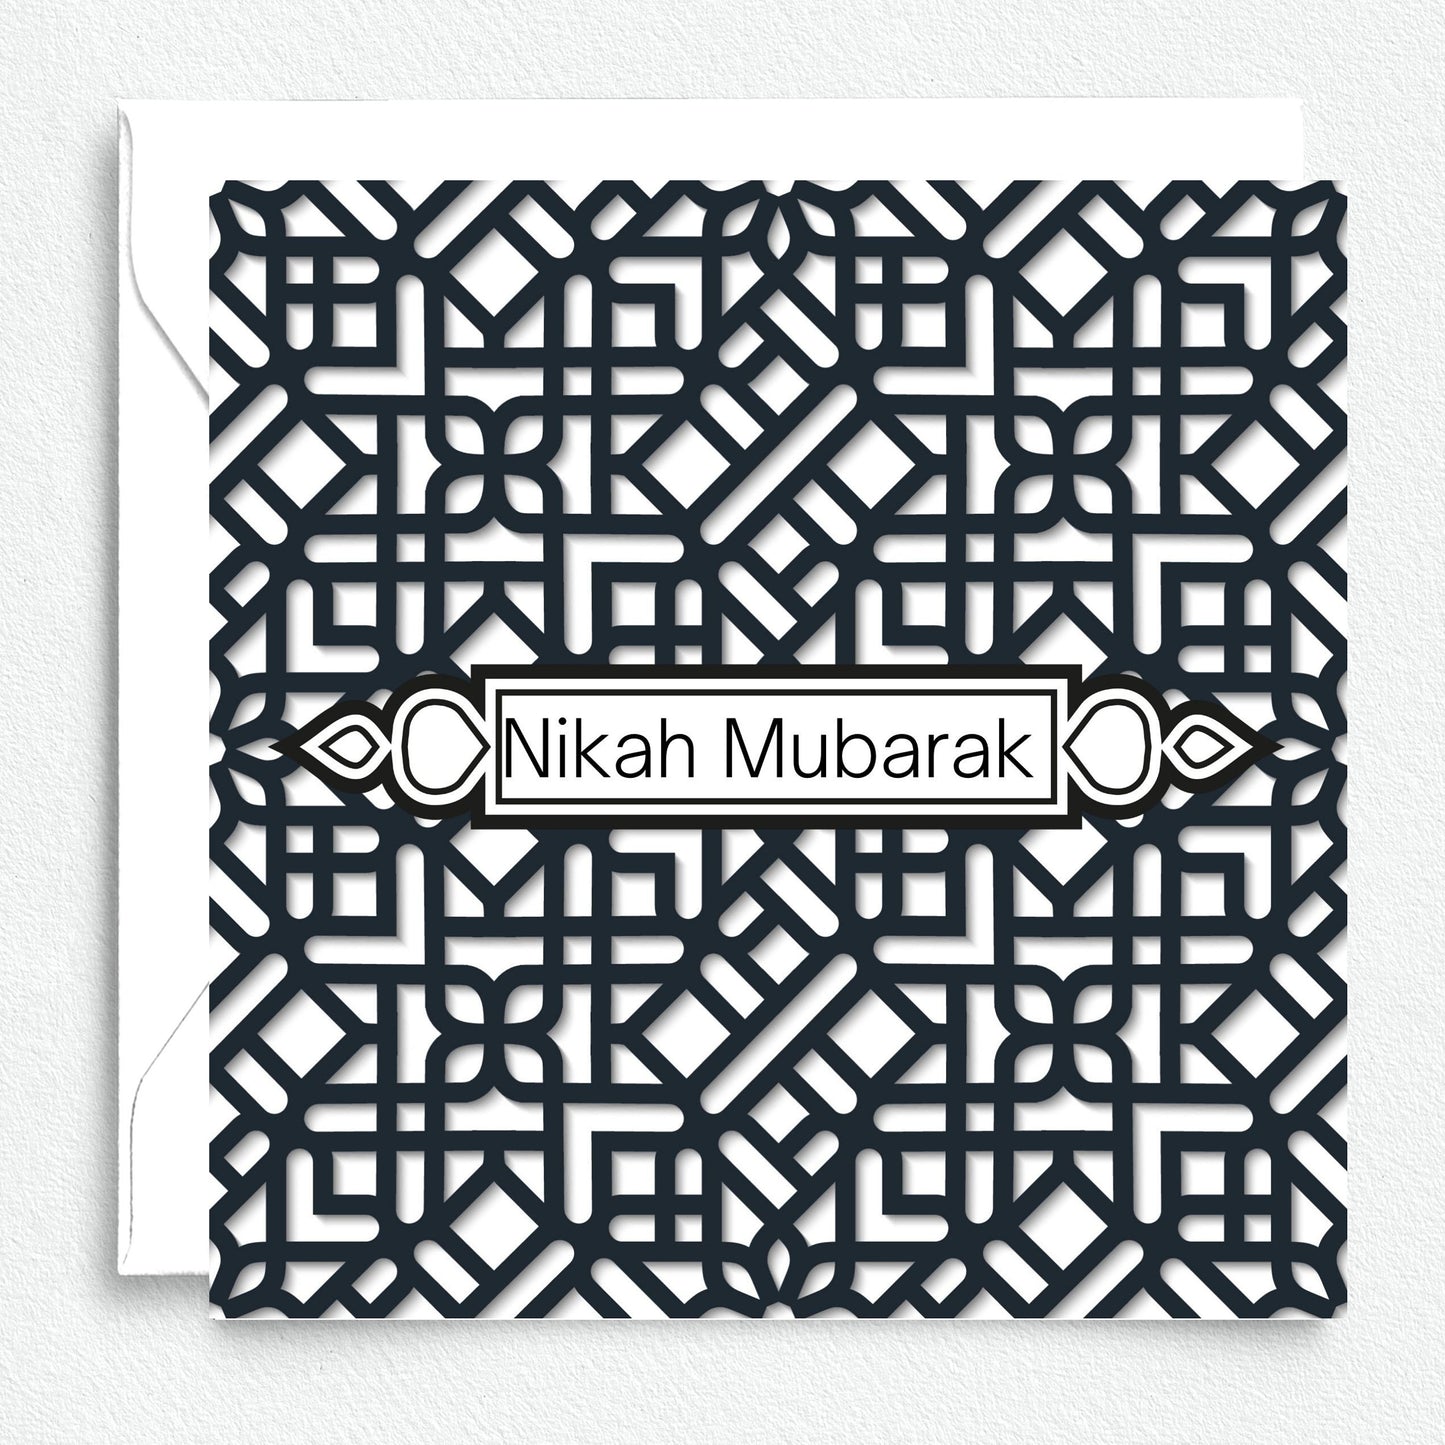 Nikah Mubarak Greeting card, ideal islamic greeting card in Black